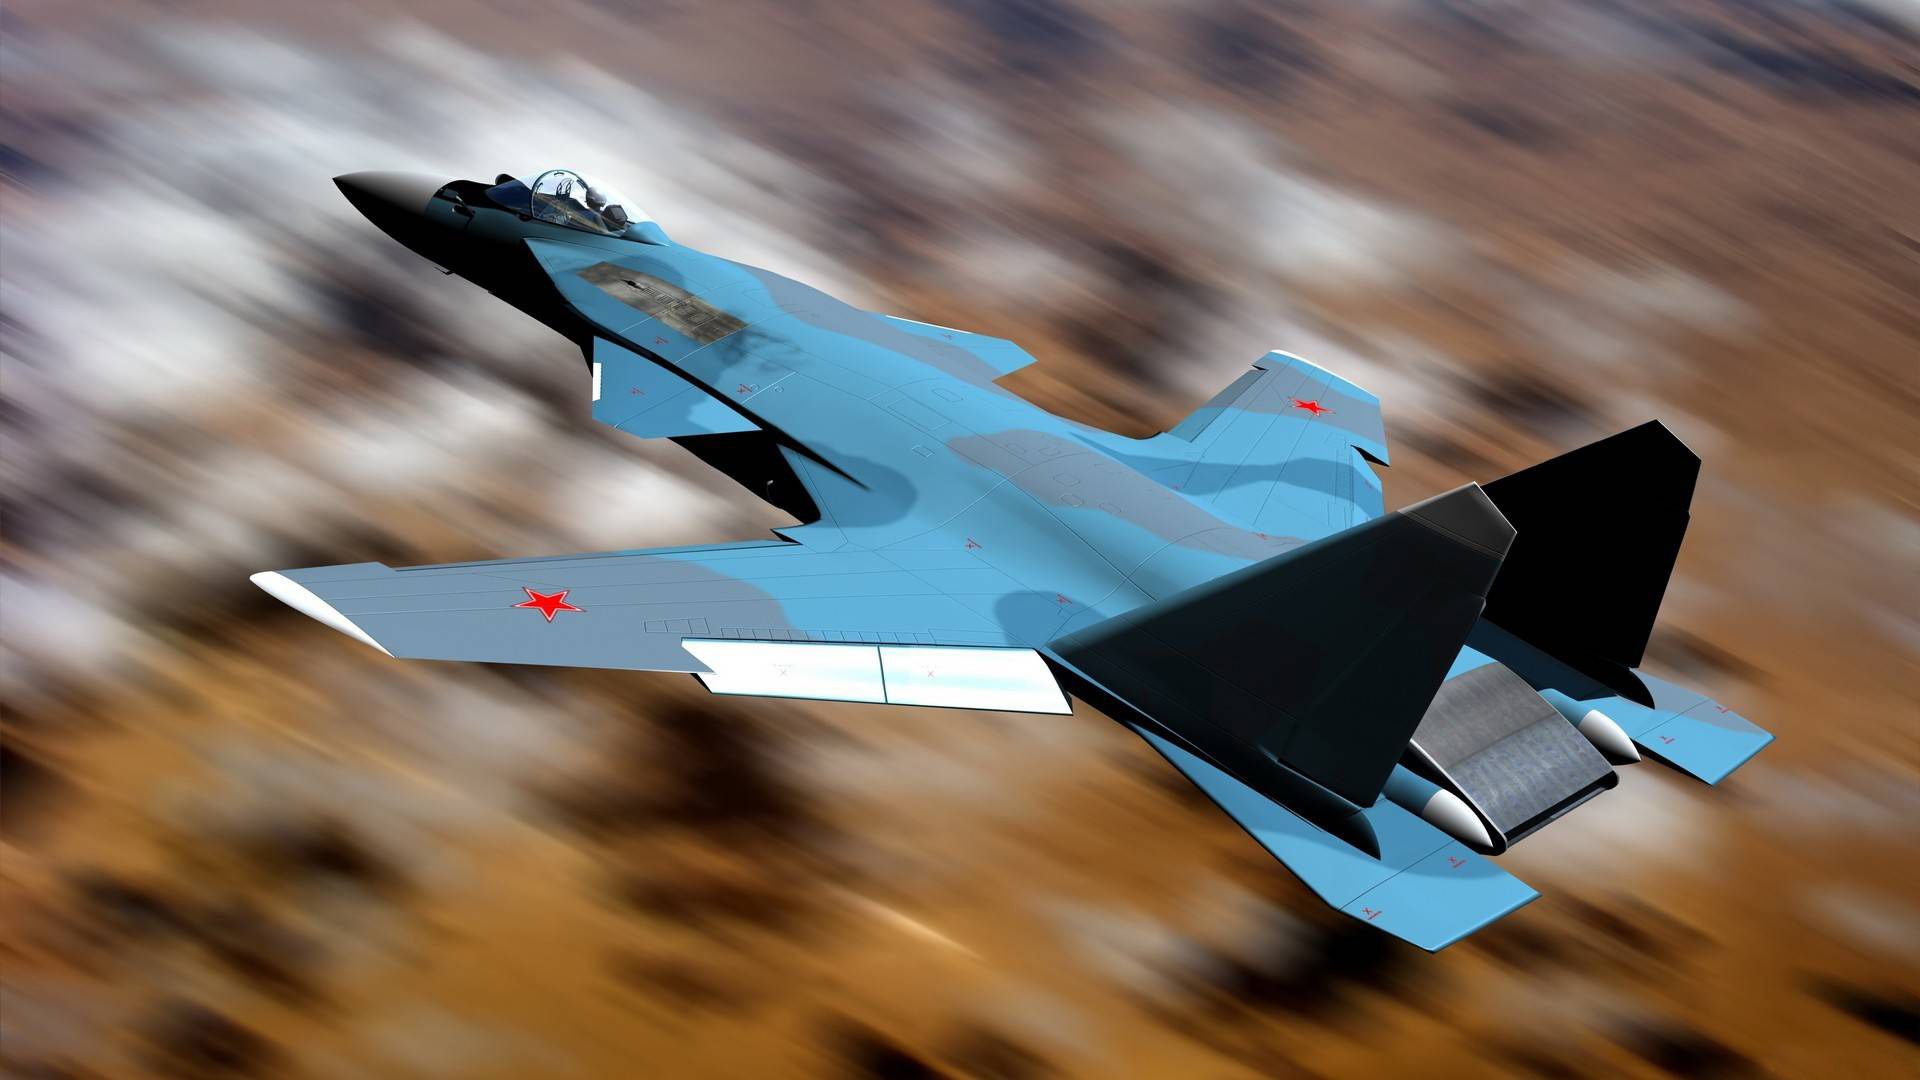 Wallpaper Su- Berkut, Firkin, Sukhoi, Fighter, swept wing, abnormal engine desktop wallpaper Aircrafts and Planes GoodWP.com